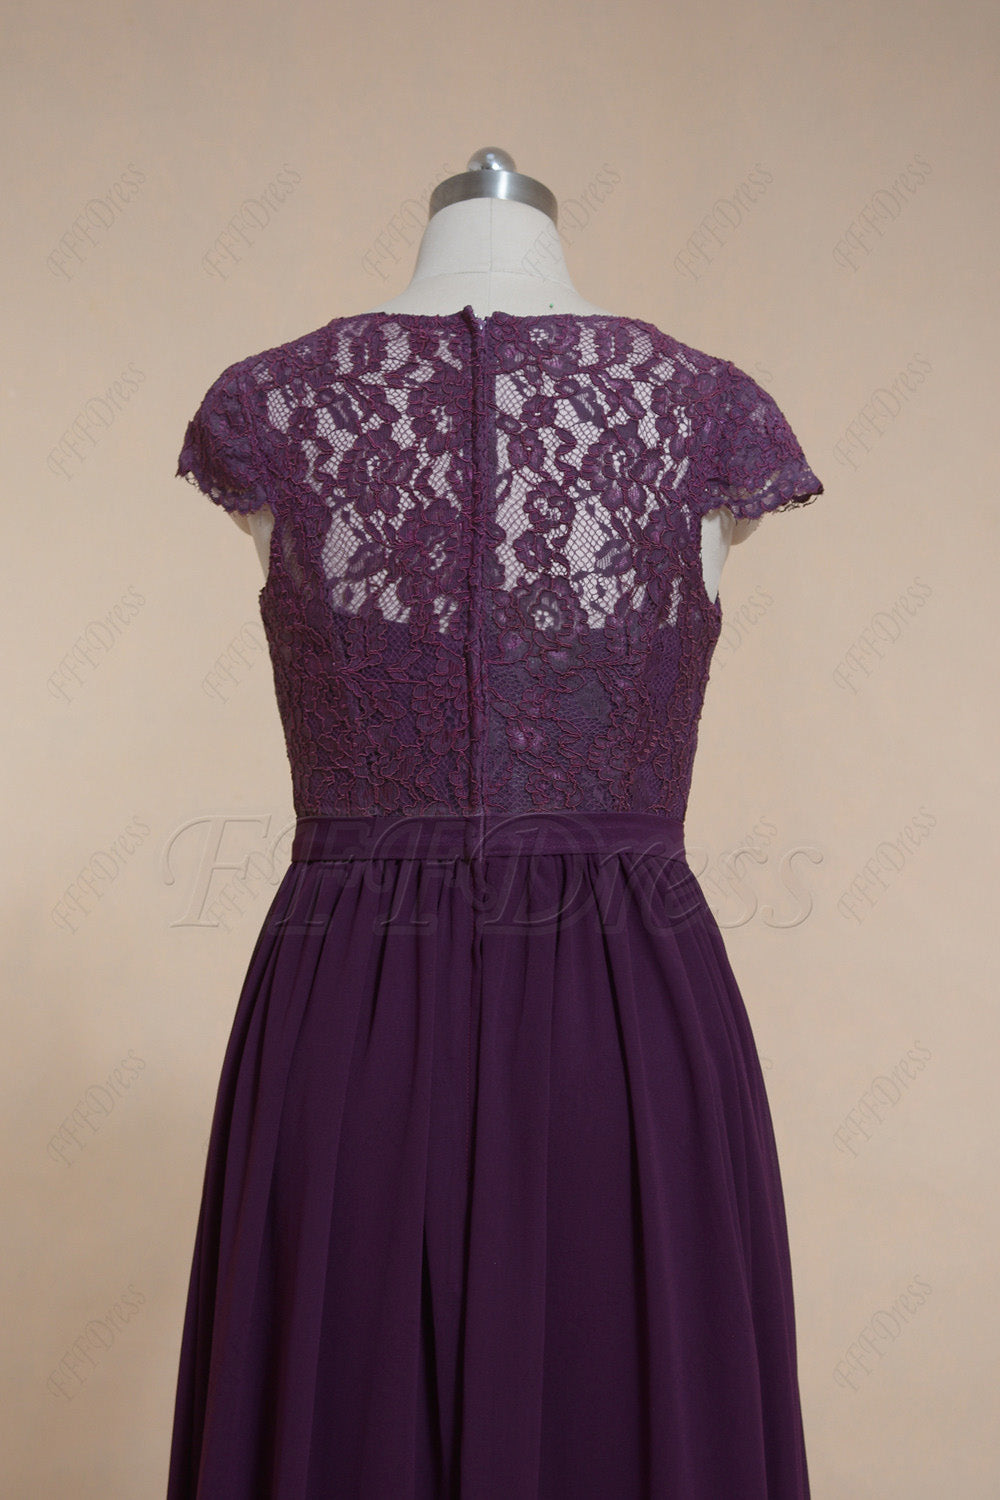 Modest plum purple bridesmaid dresses long